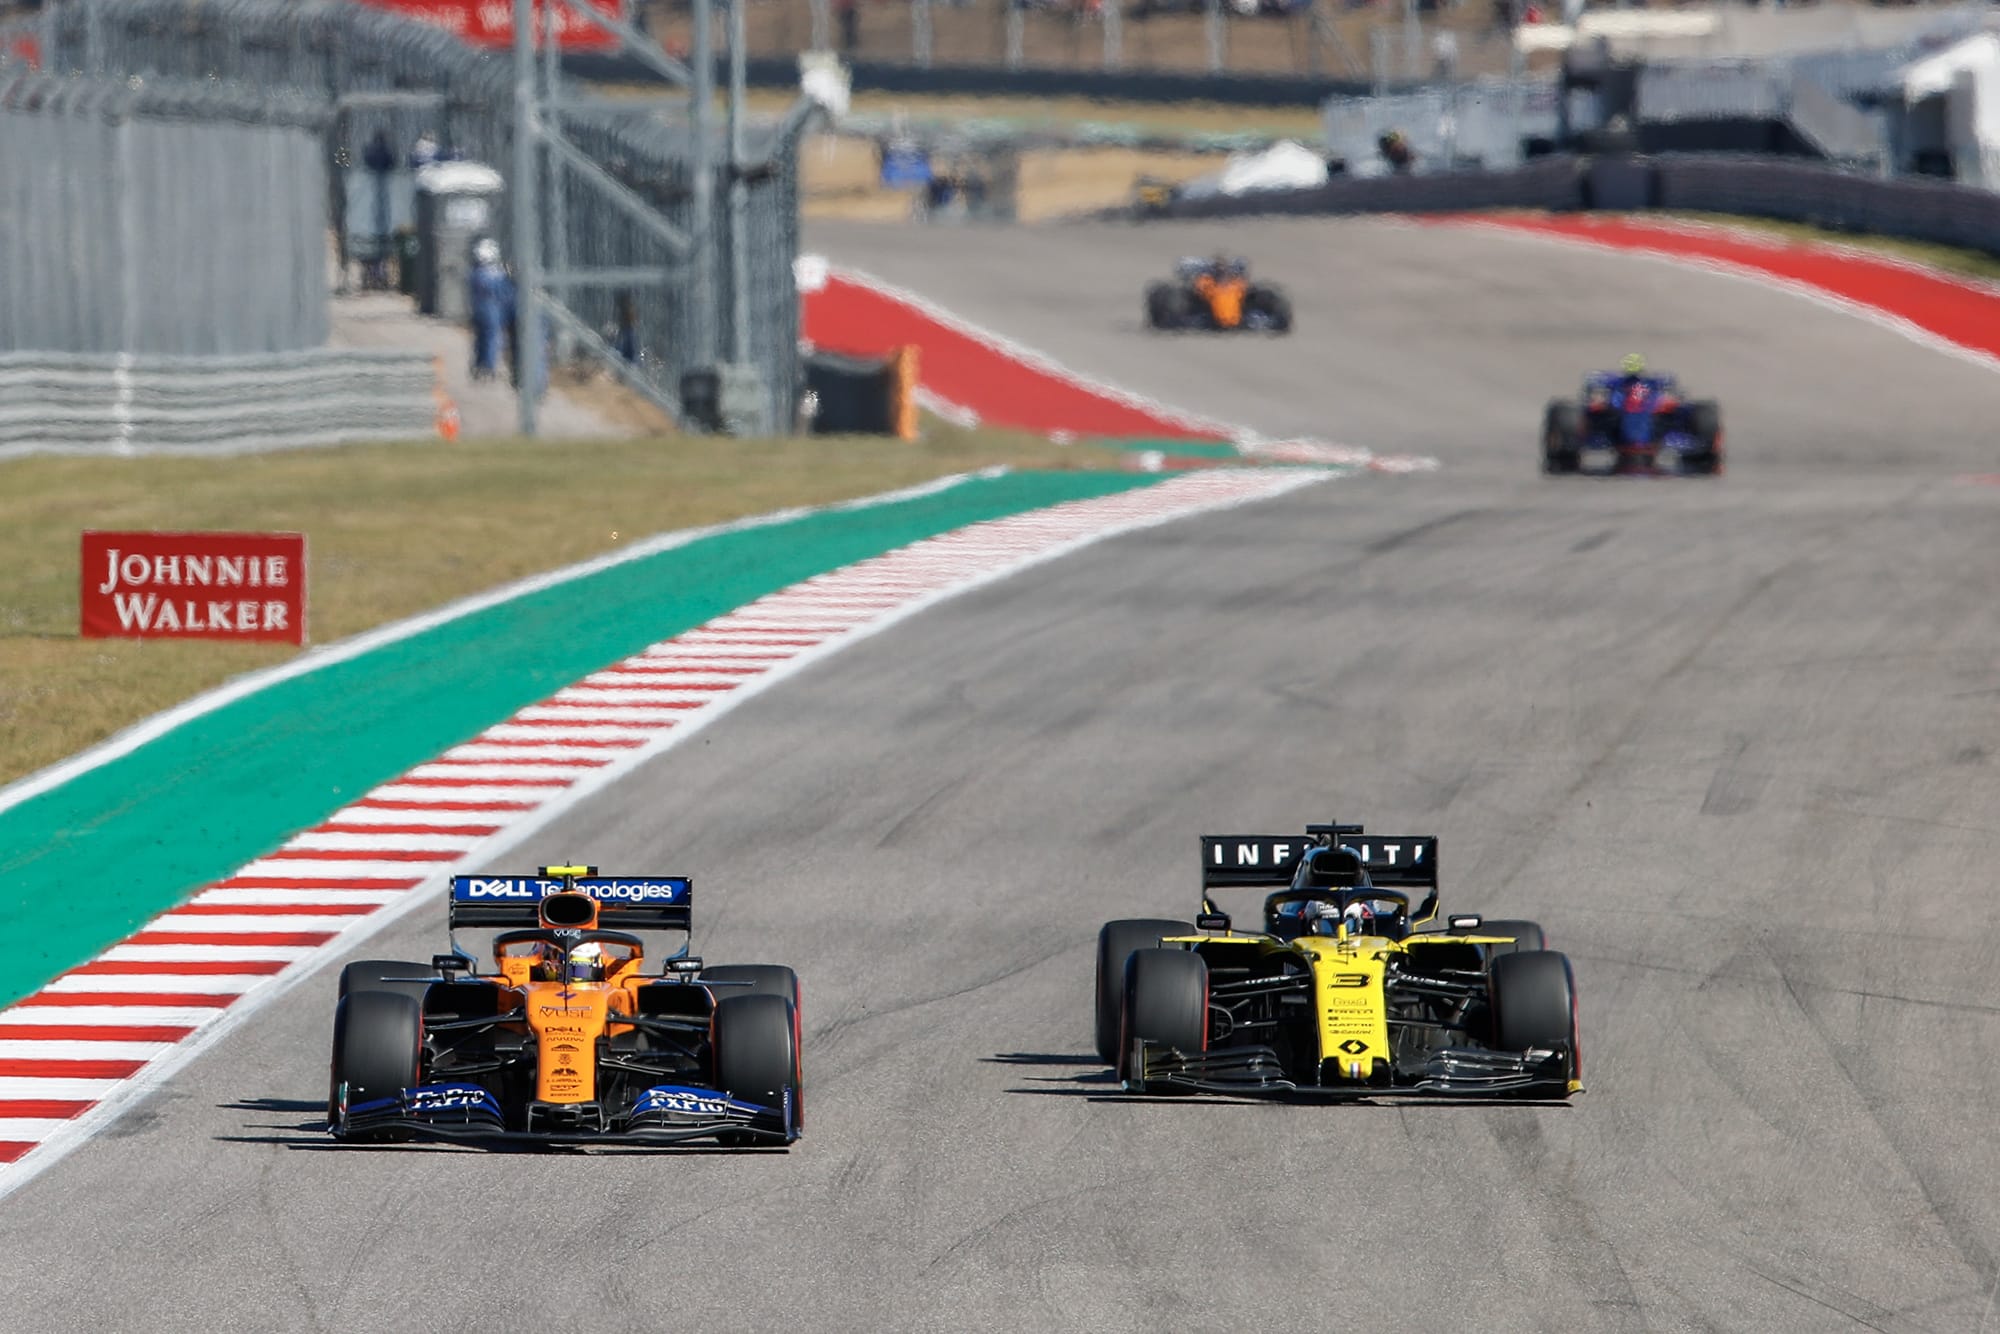 Lando Norris and Daniel Ricciardo side by side during the 2019 US Grand Prix